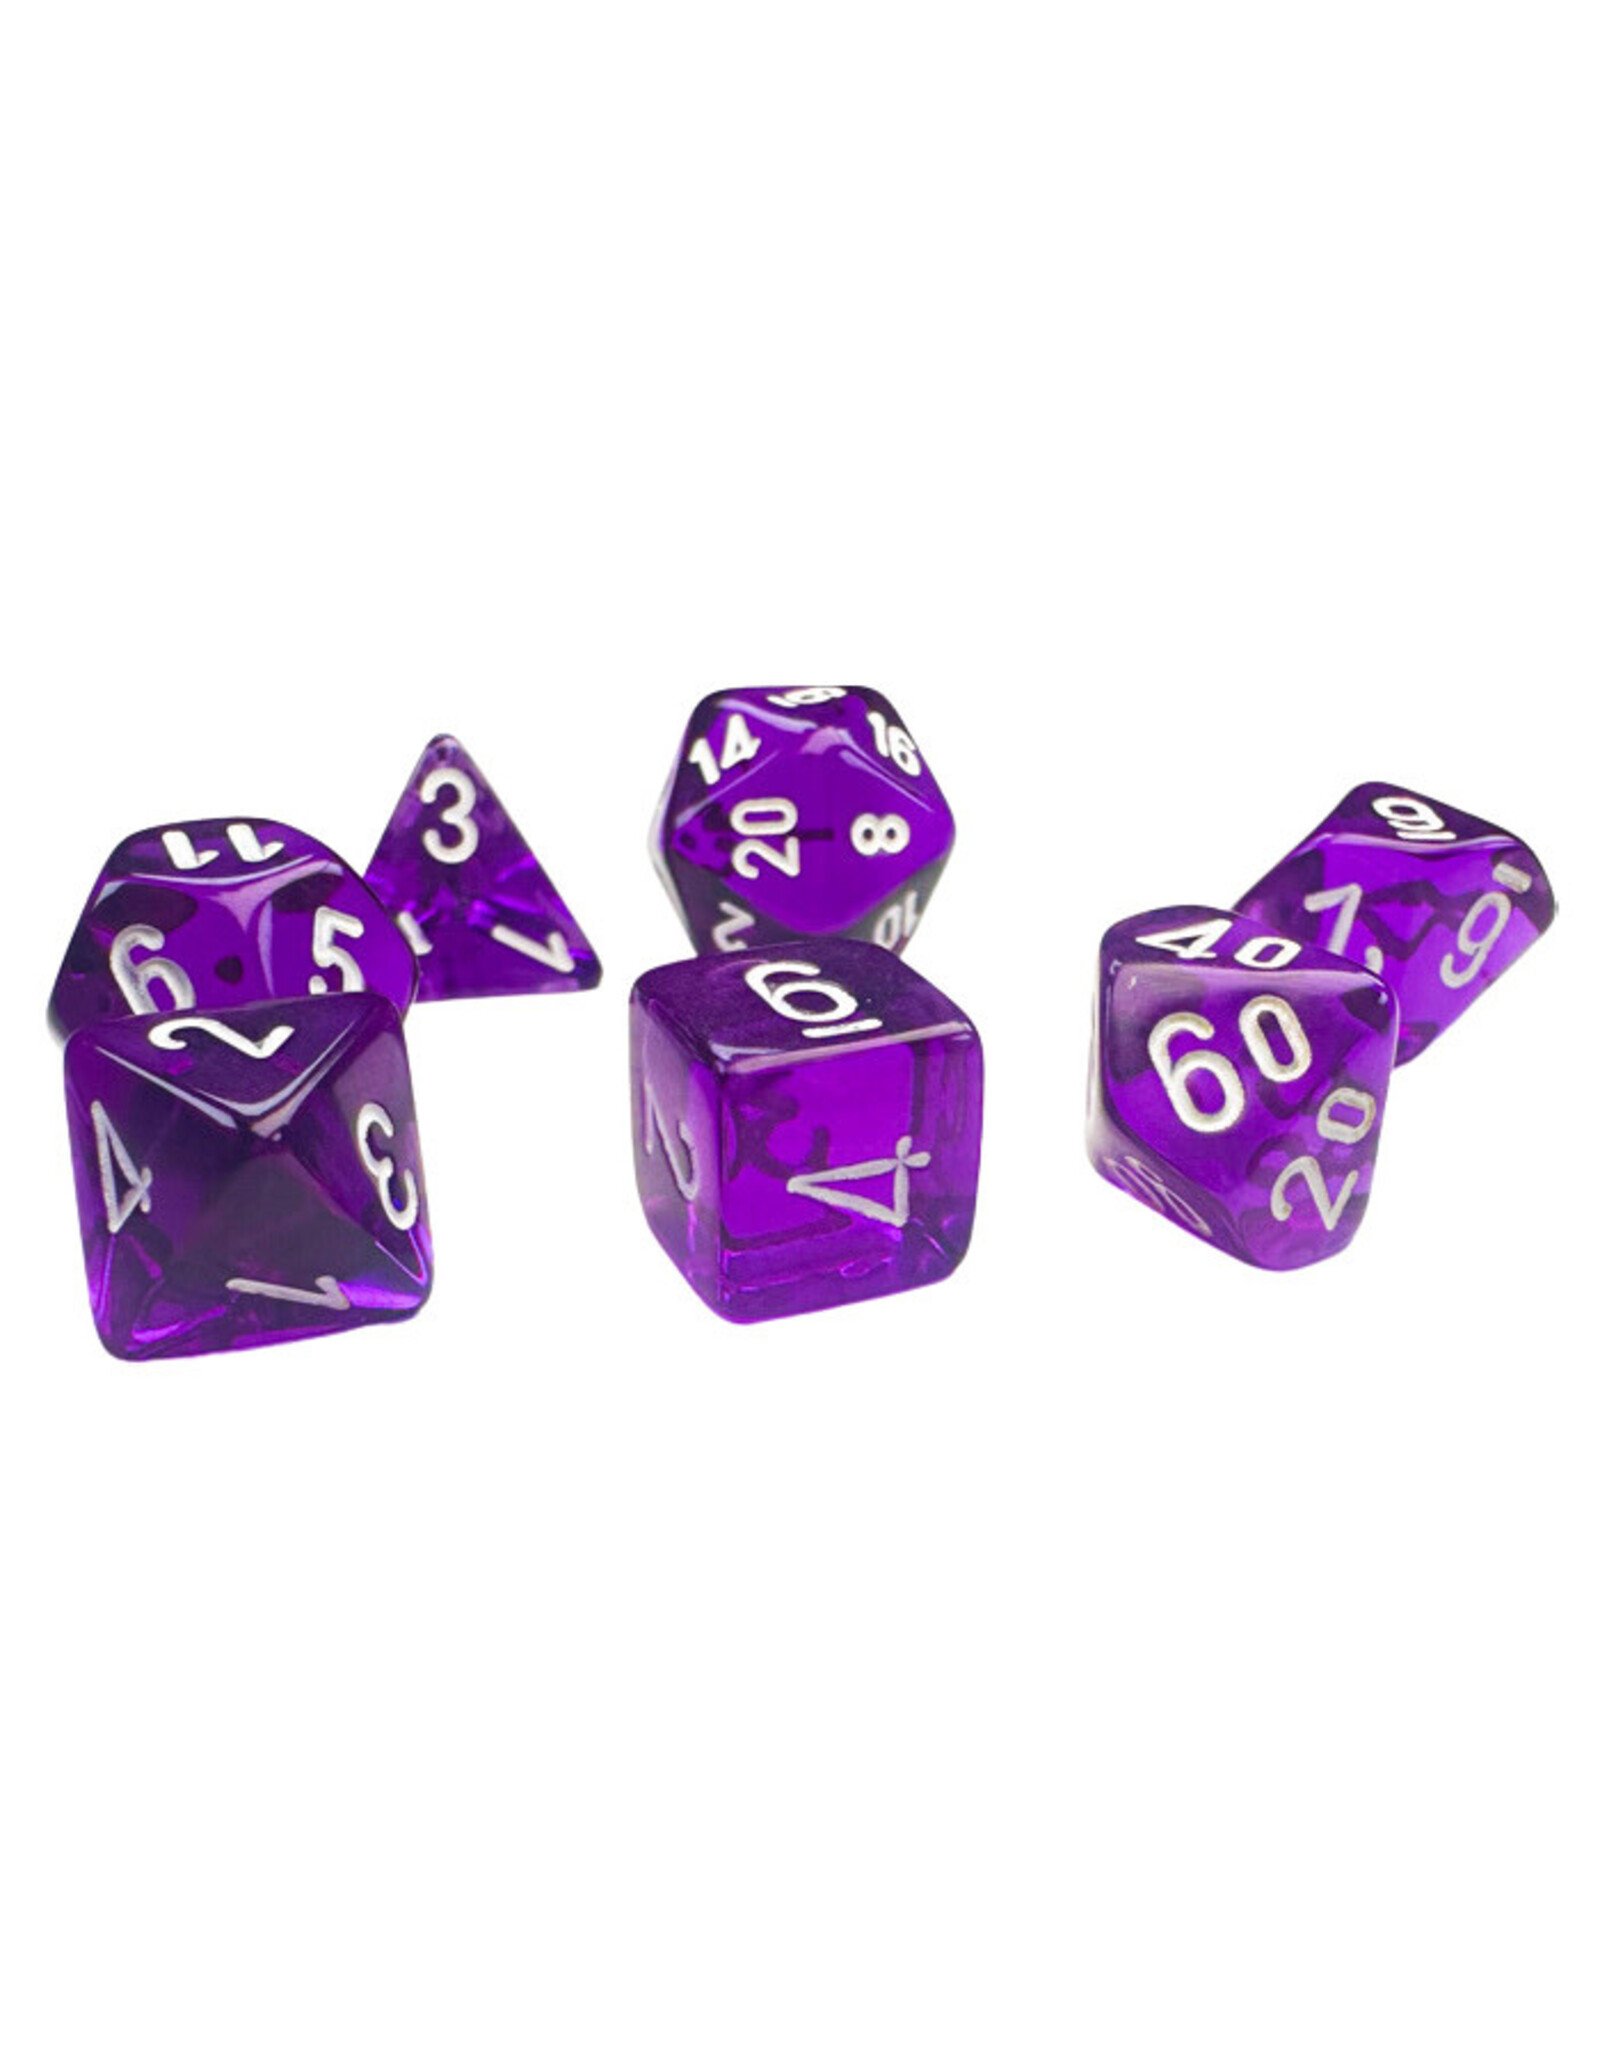 Chessex Mini Translucent Purple with White poly 7 dice set